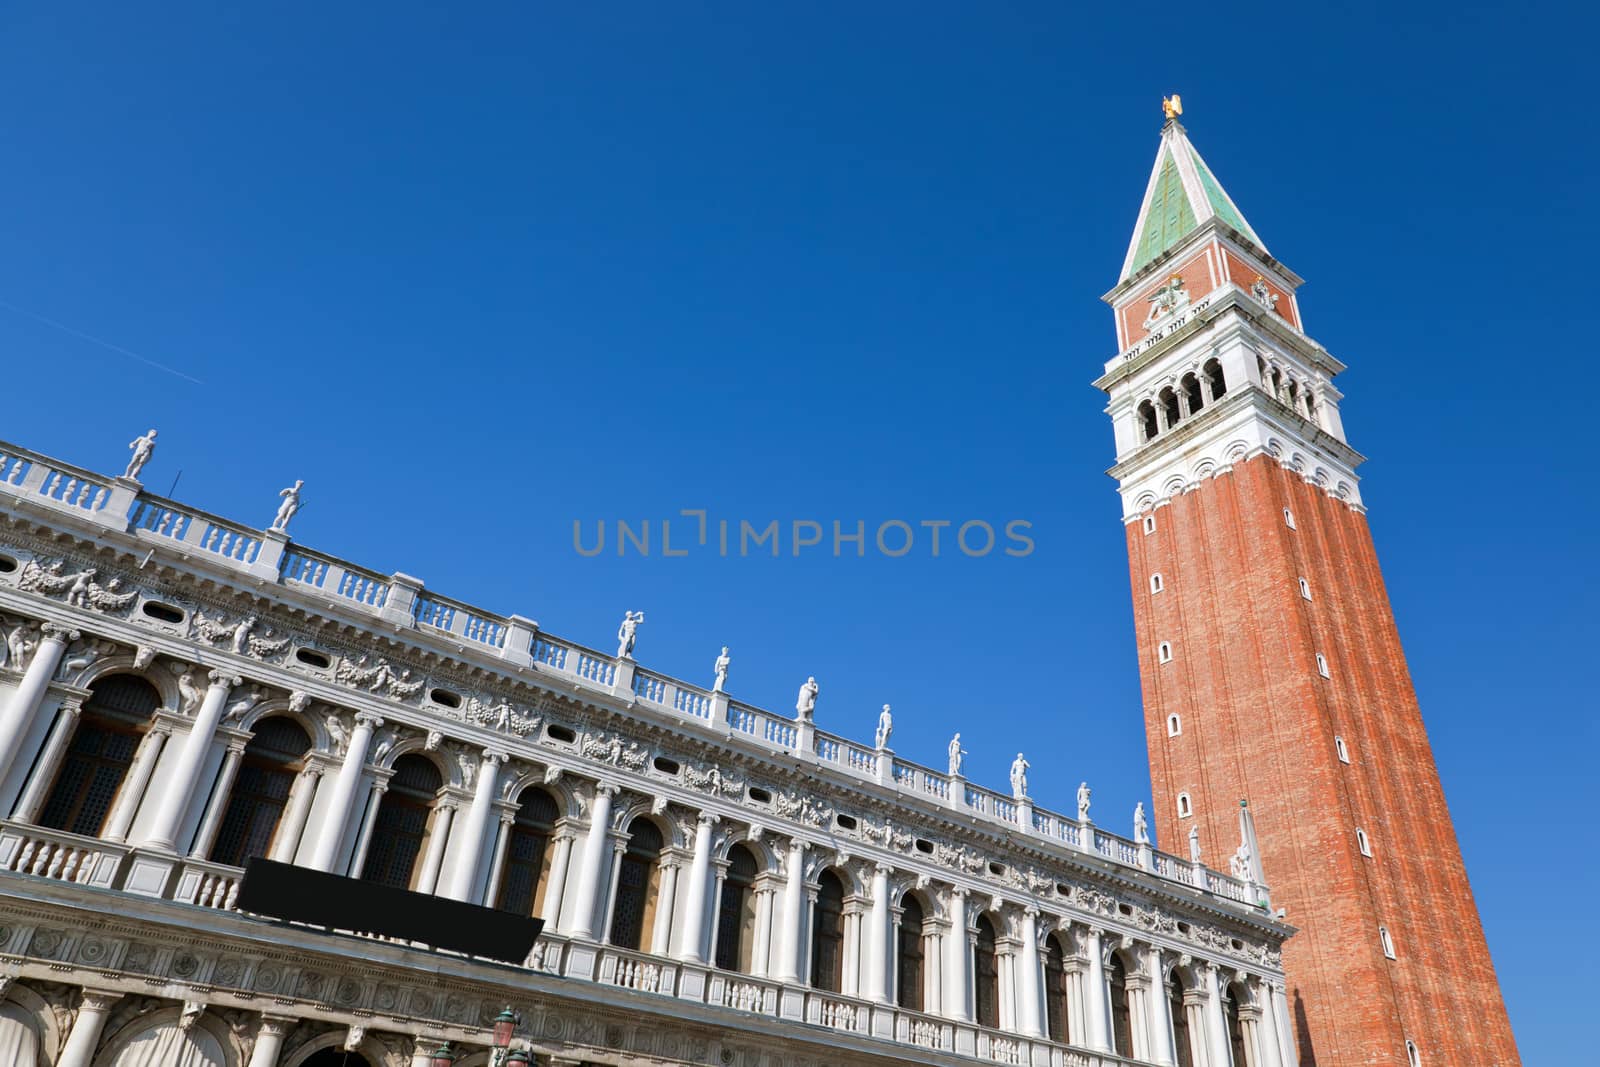 St Marks Campanile, Italian Campanile di San Marco, the bell tower of St Mark's Basilica in Venice, Italy.